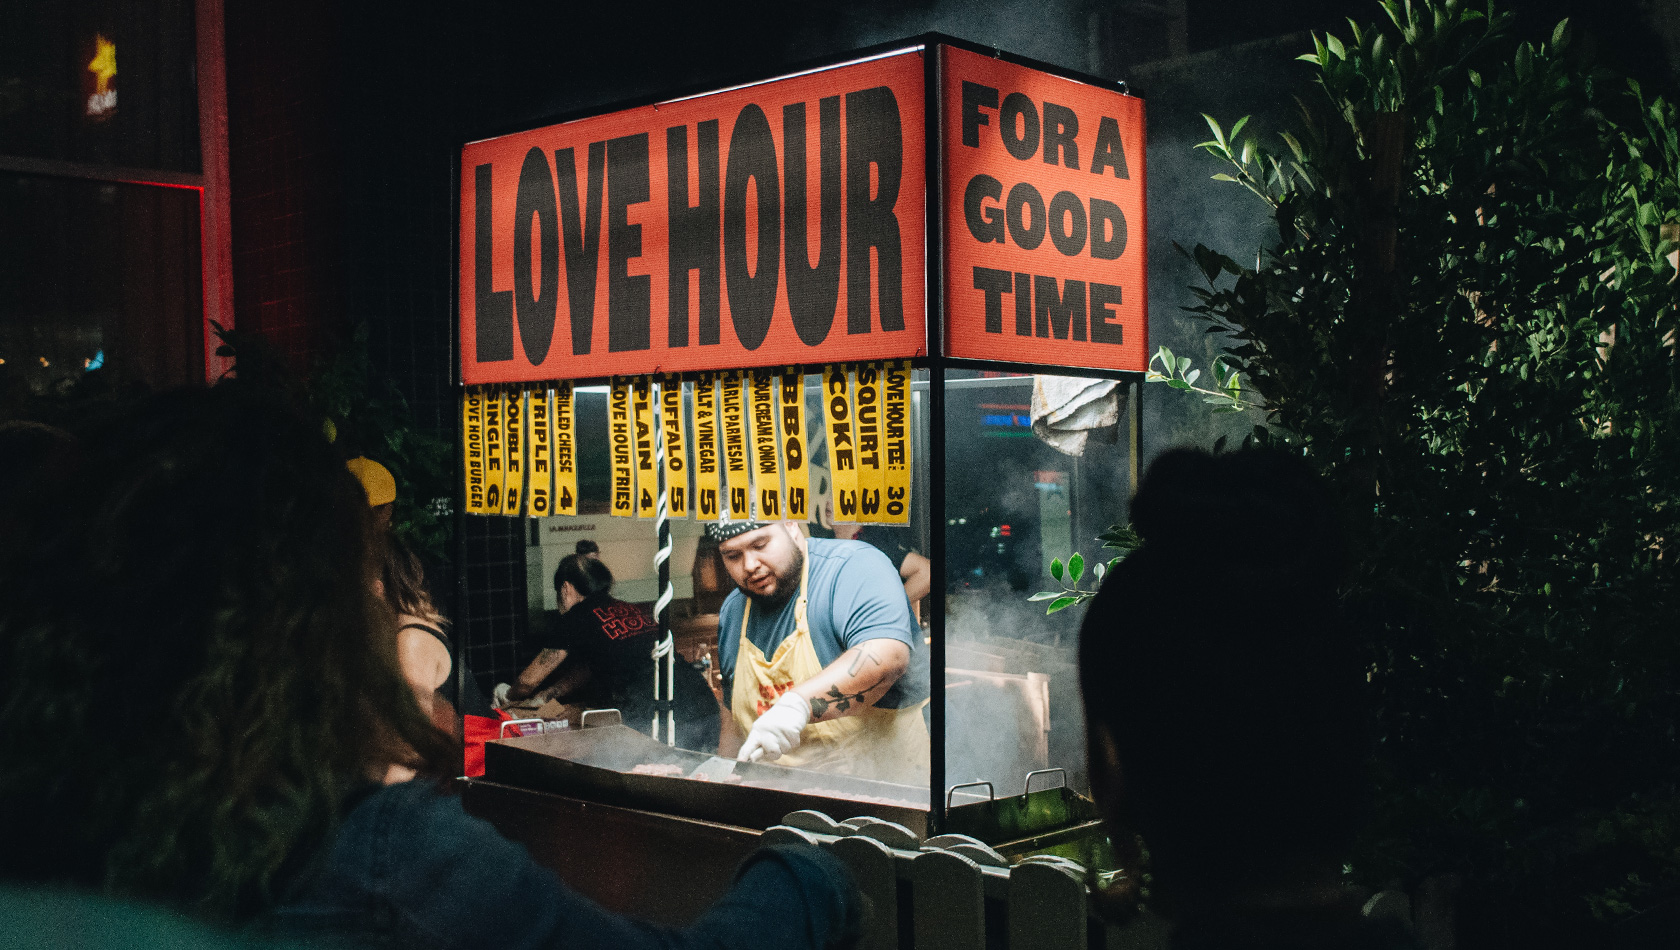 Love hour fast food corner